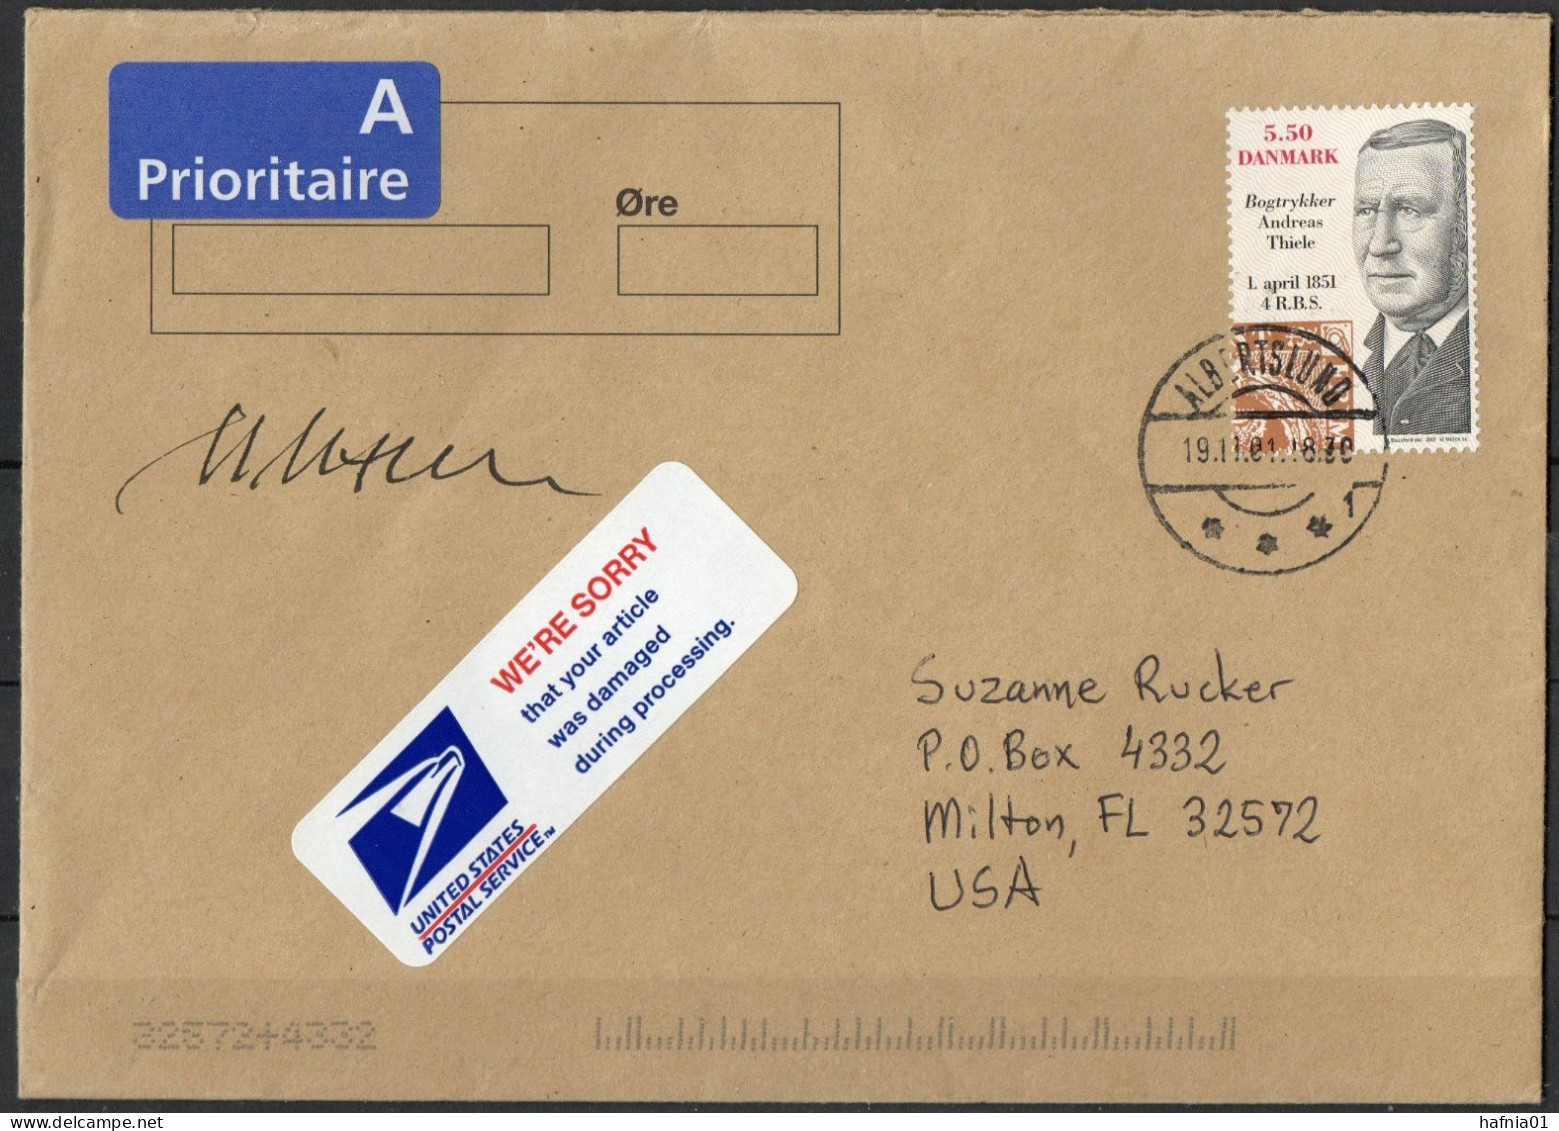 Martin Mörck. Denmark 2001. 150 Anniv Danish Stamps. Ordinary Letter Sent To USA. Signed. - Covers & Documents